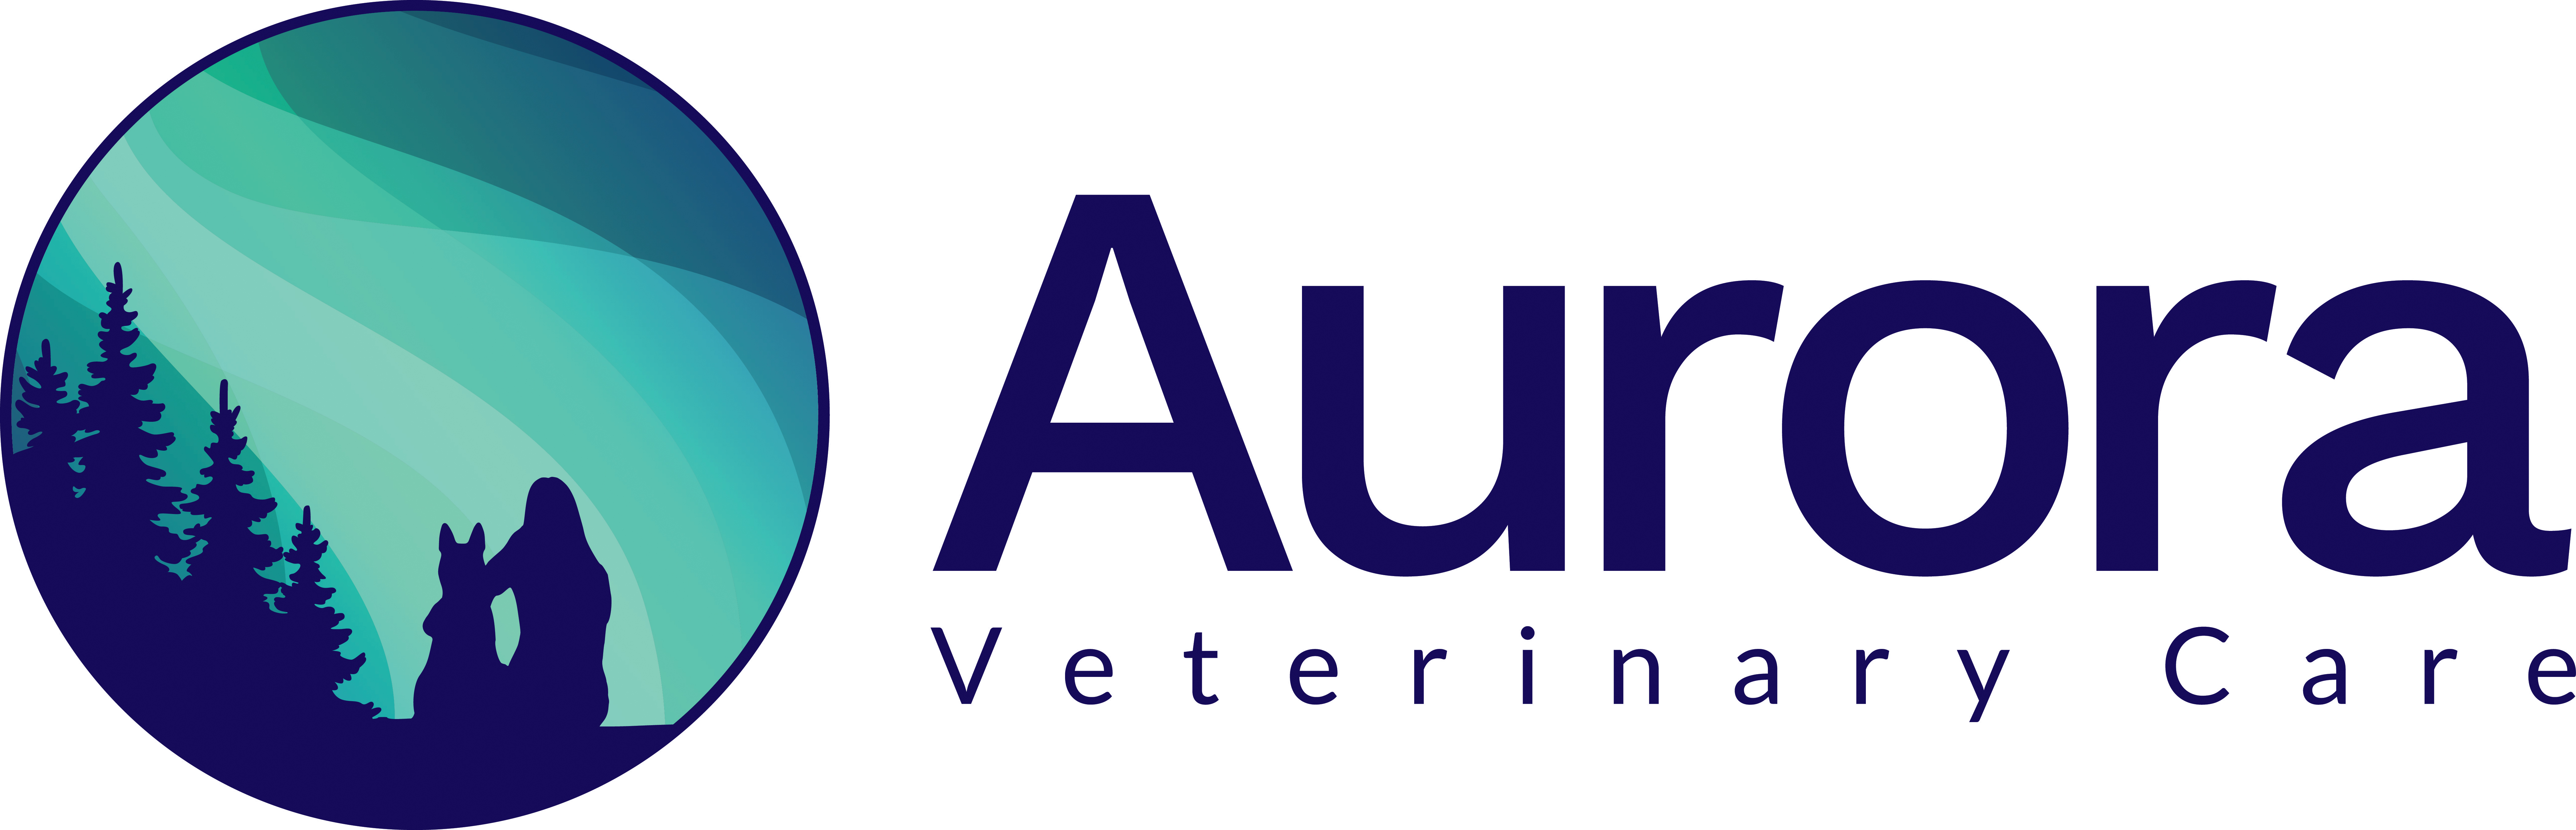 Aurora Veterinary Care